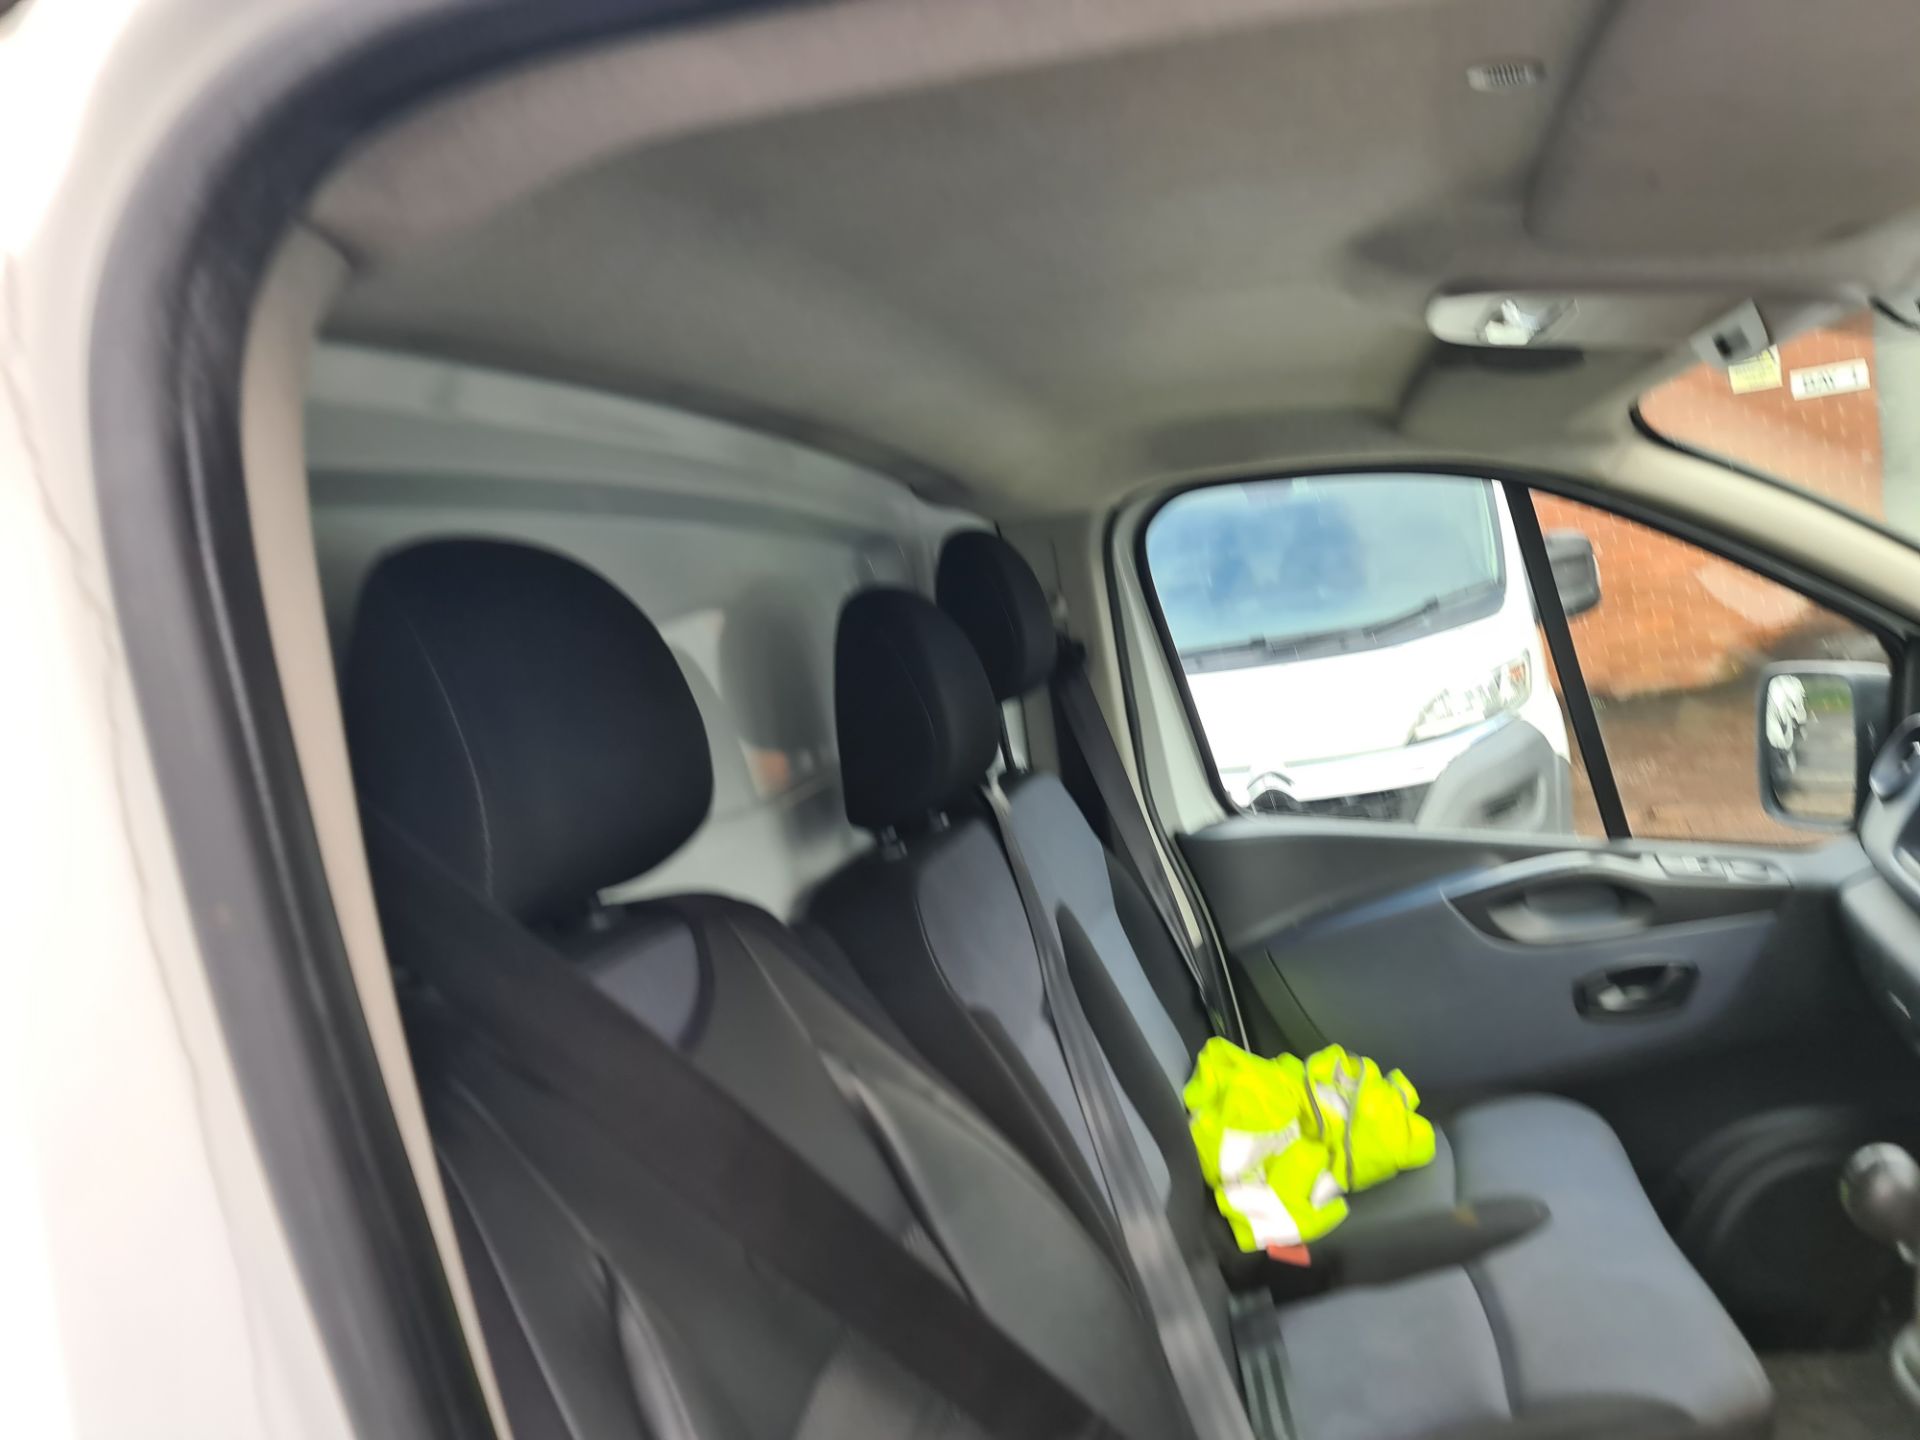 2015 Vauxhall Vivaro 2900 CDTi panel van - Image 16 of 81